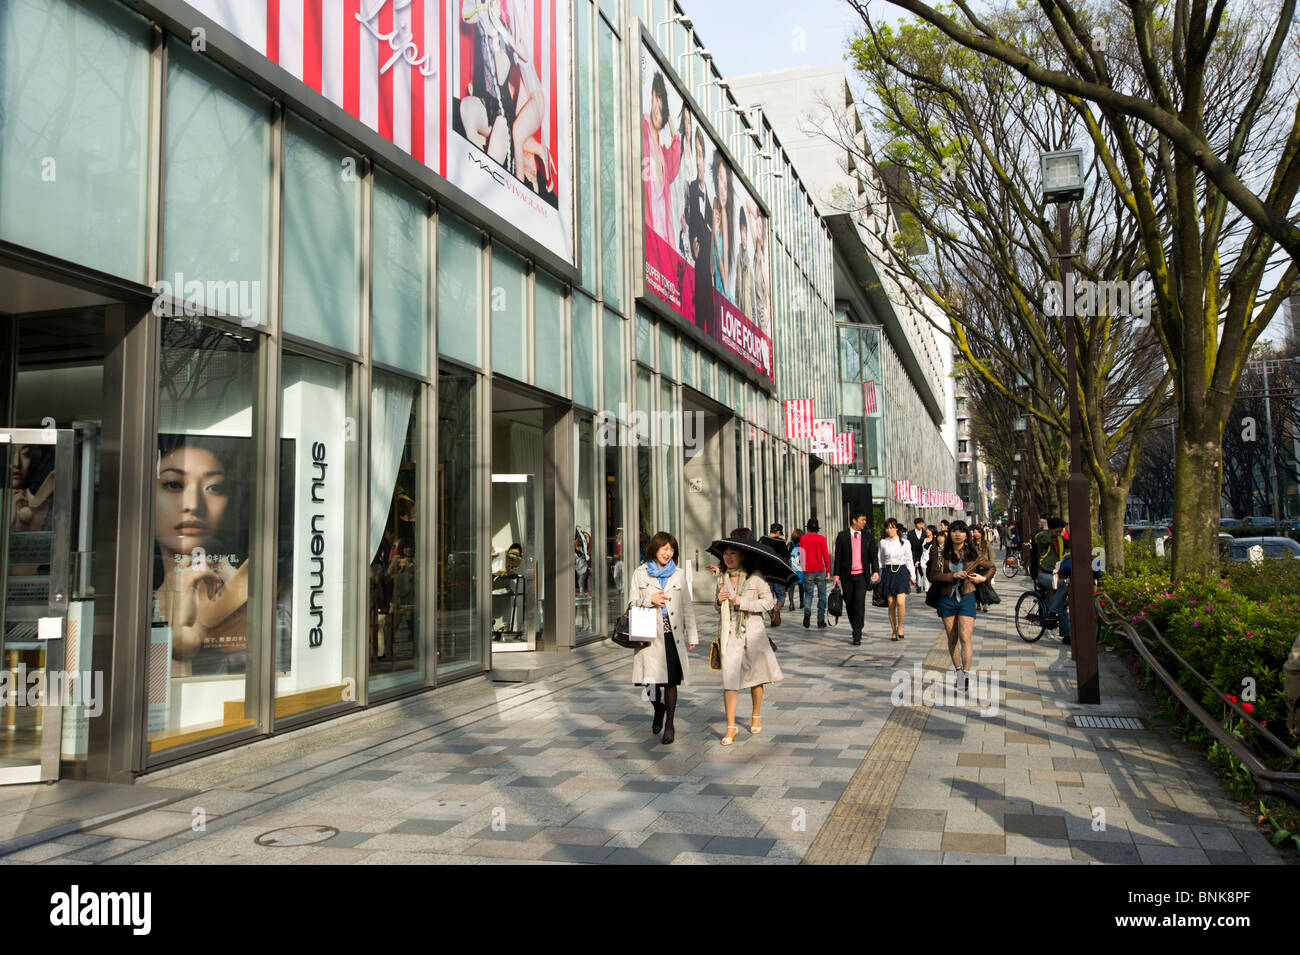 Louis Vuitton opens café in Osaka, Japan - Retail in Asia